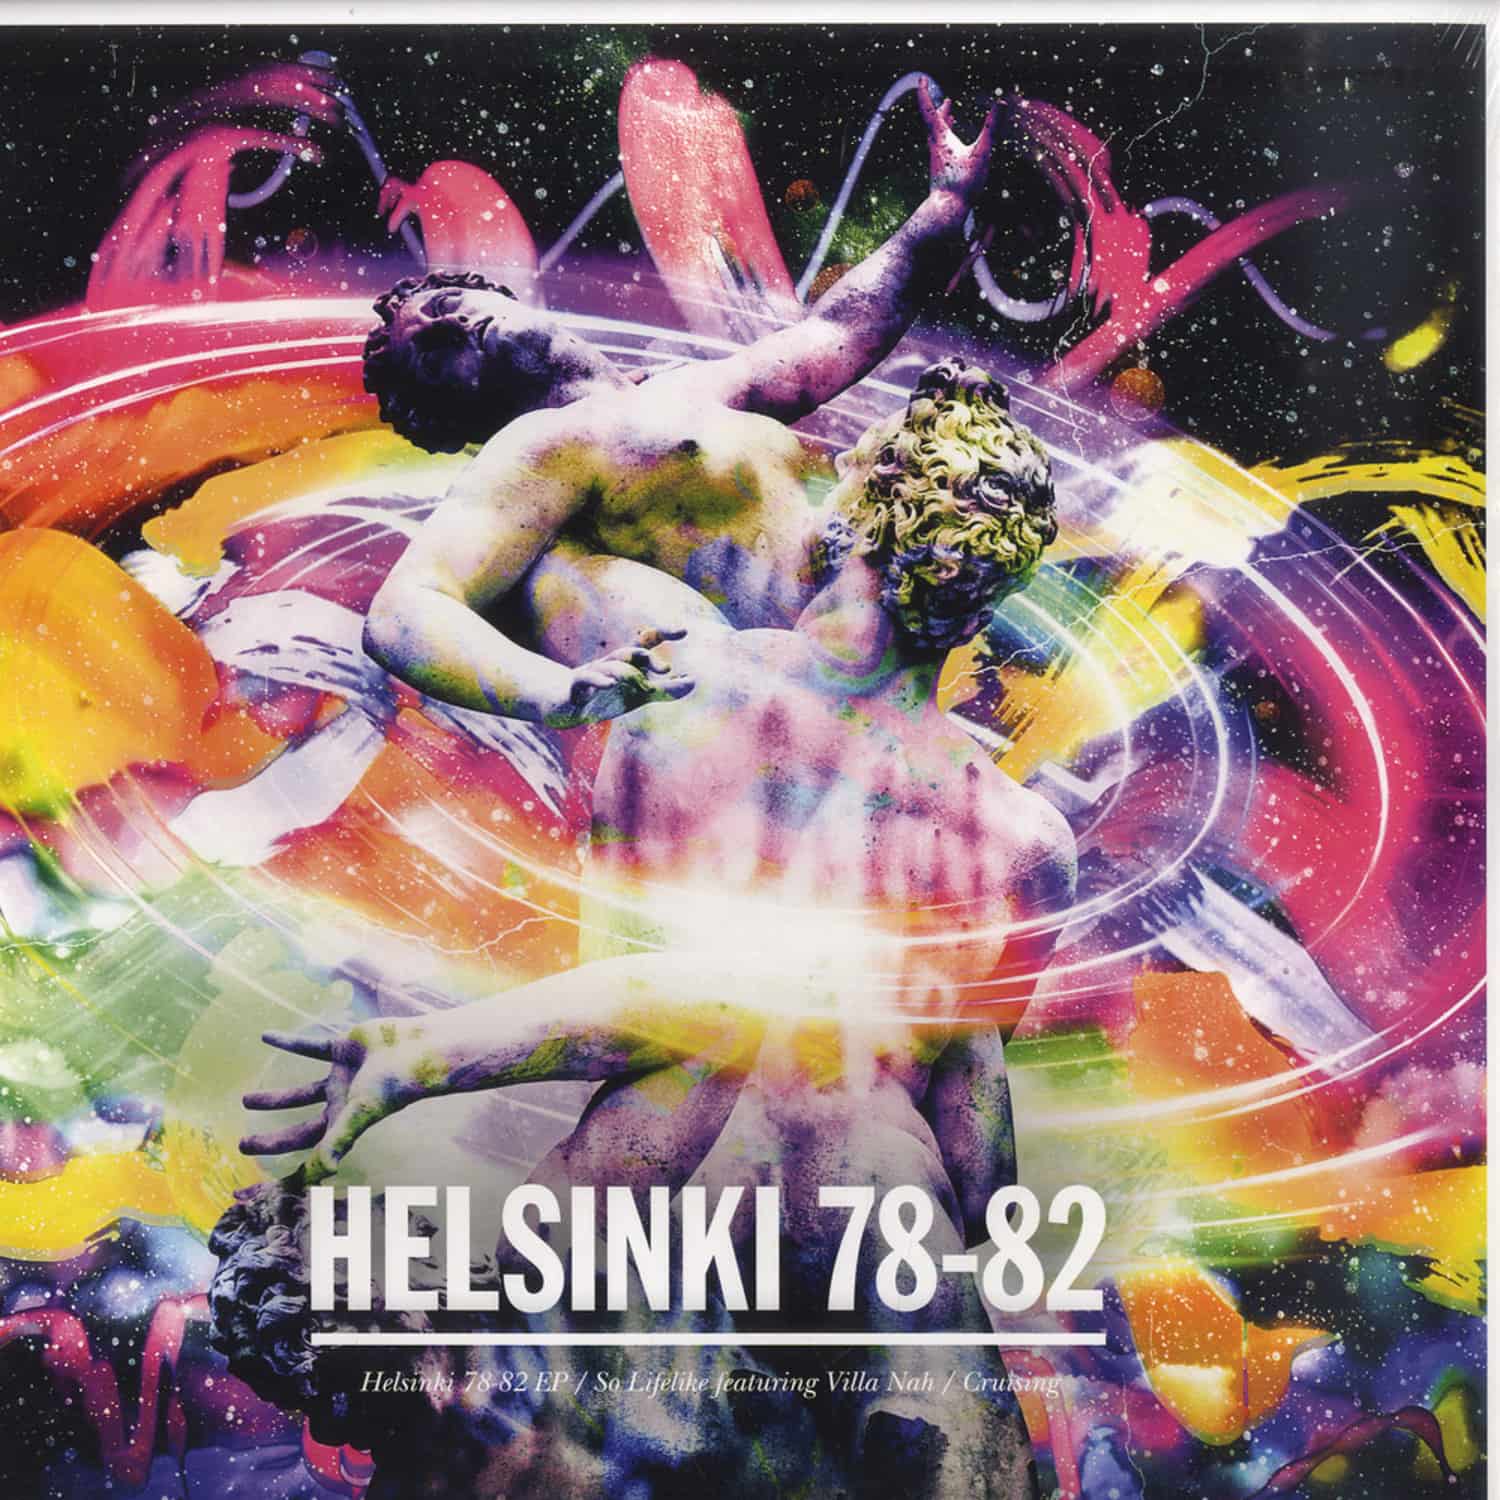 Helsinki 78-82 - SO LIFELIKE / CRUISING